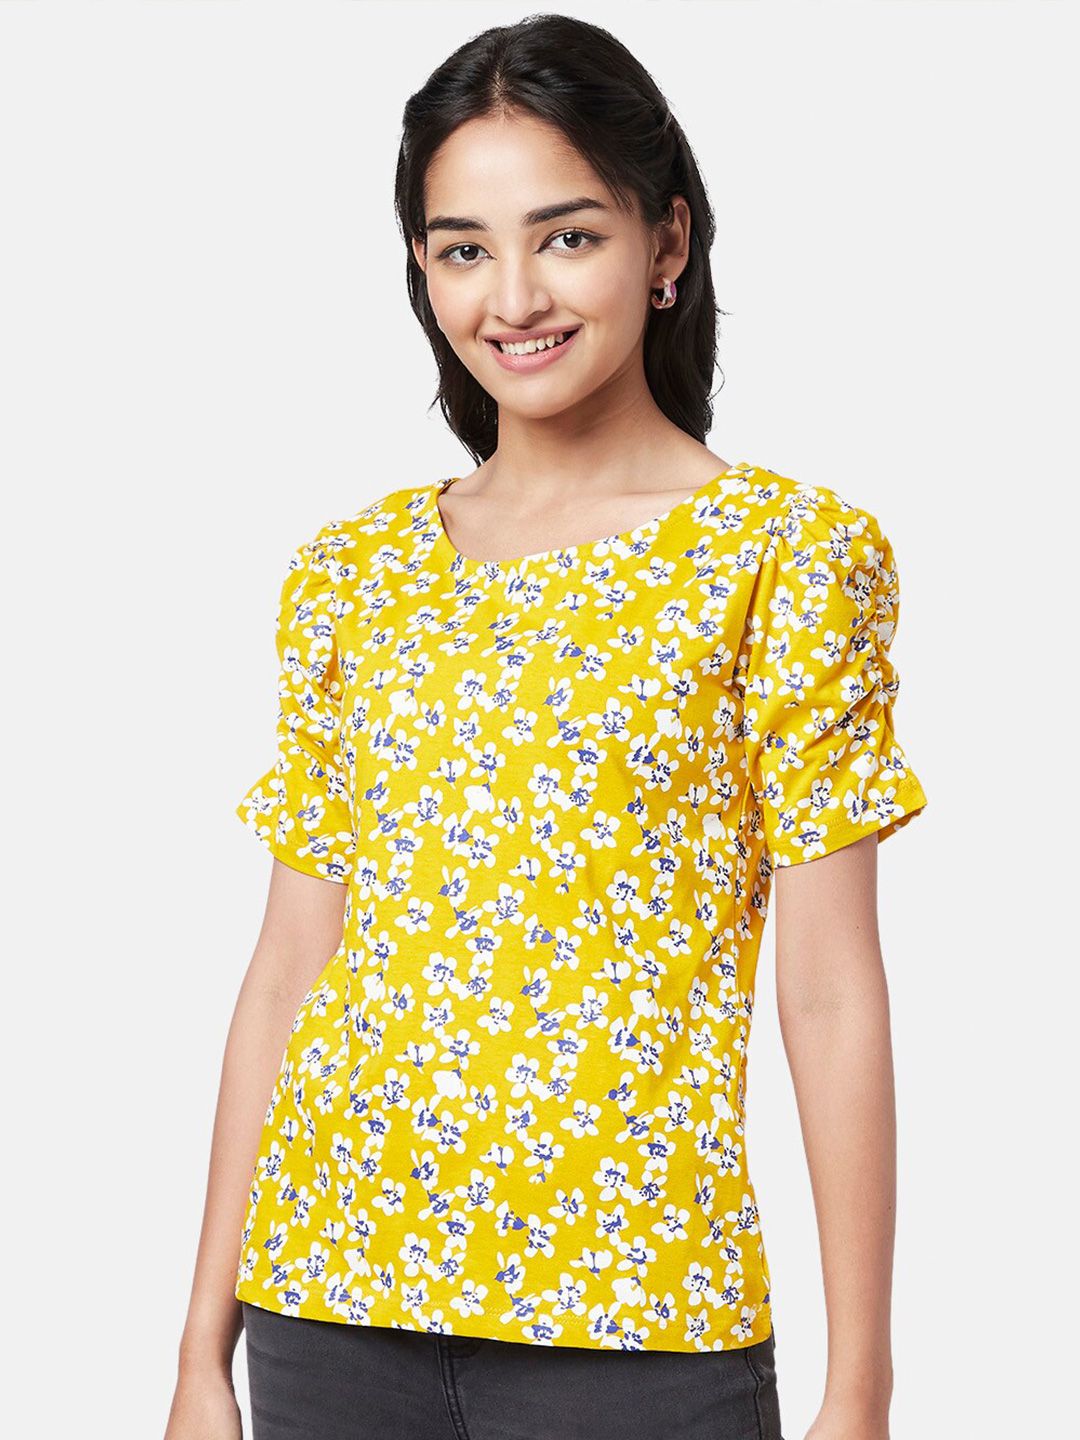 YU by Pantaloons Floral Printed Puff Sleeves Top Price in India